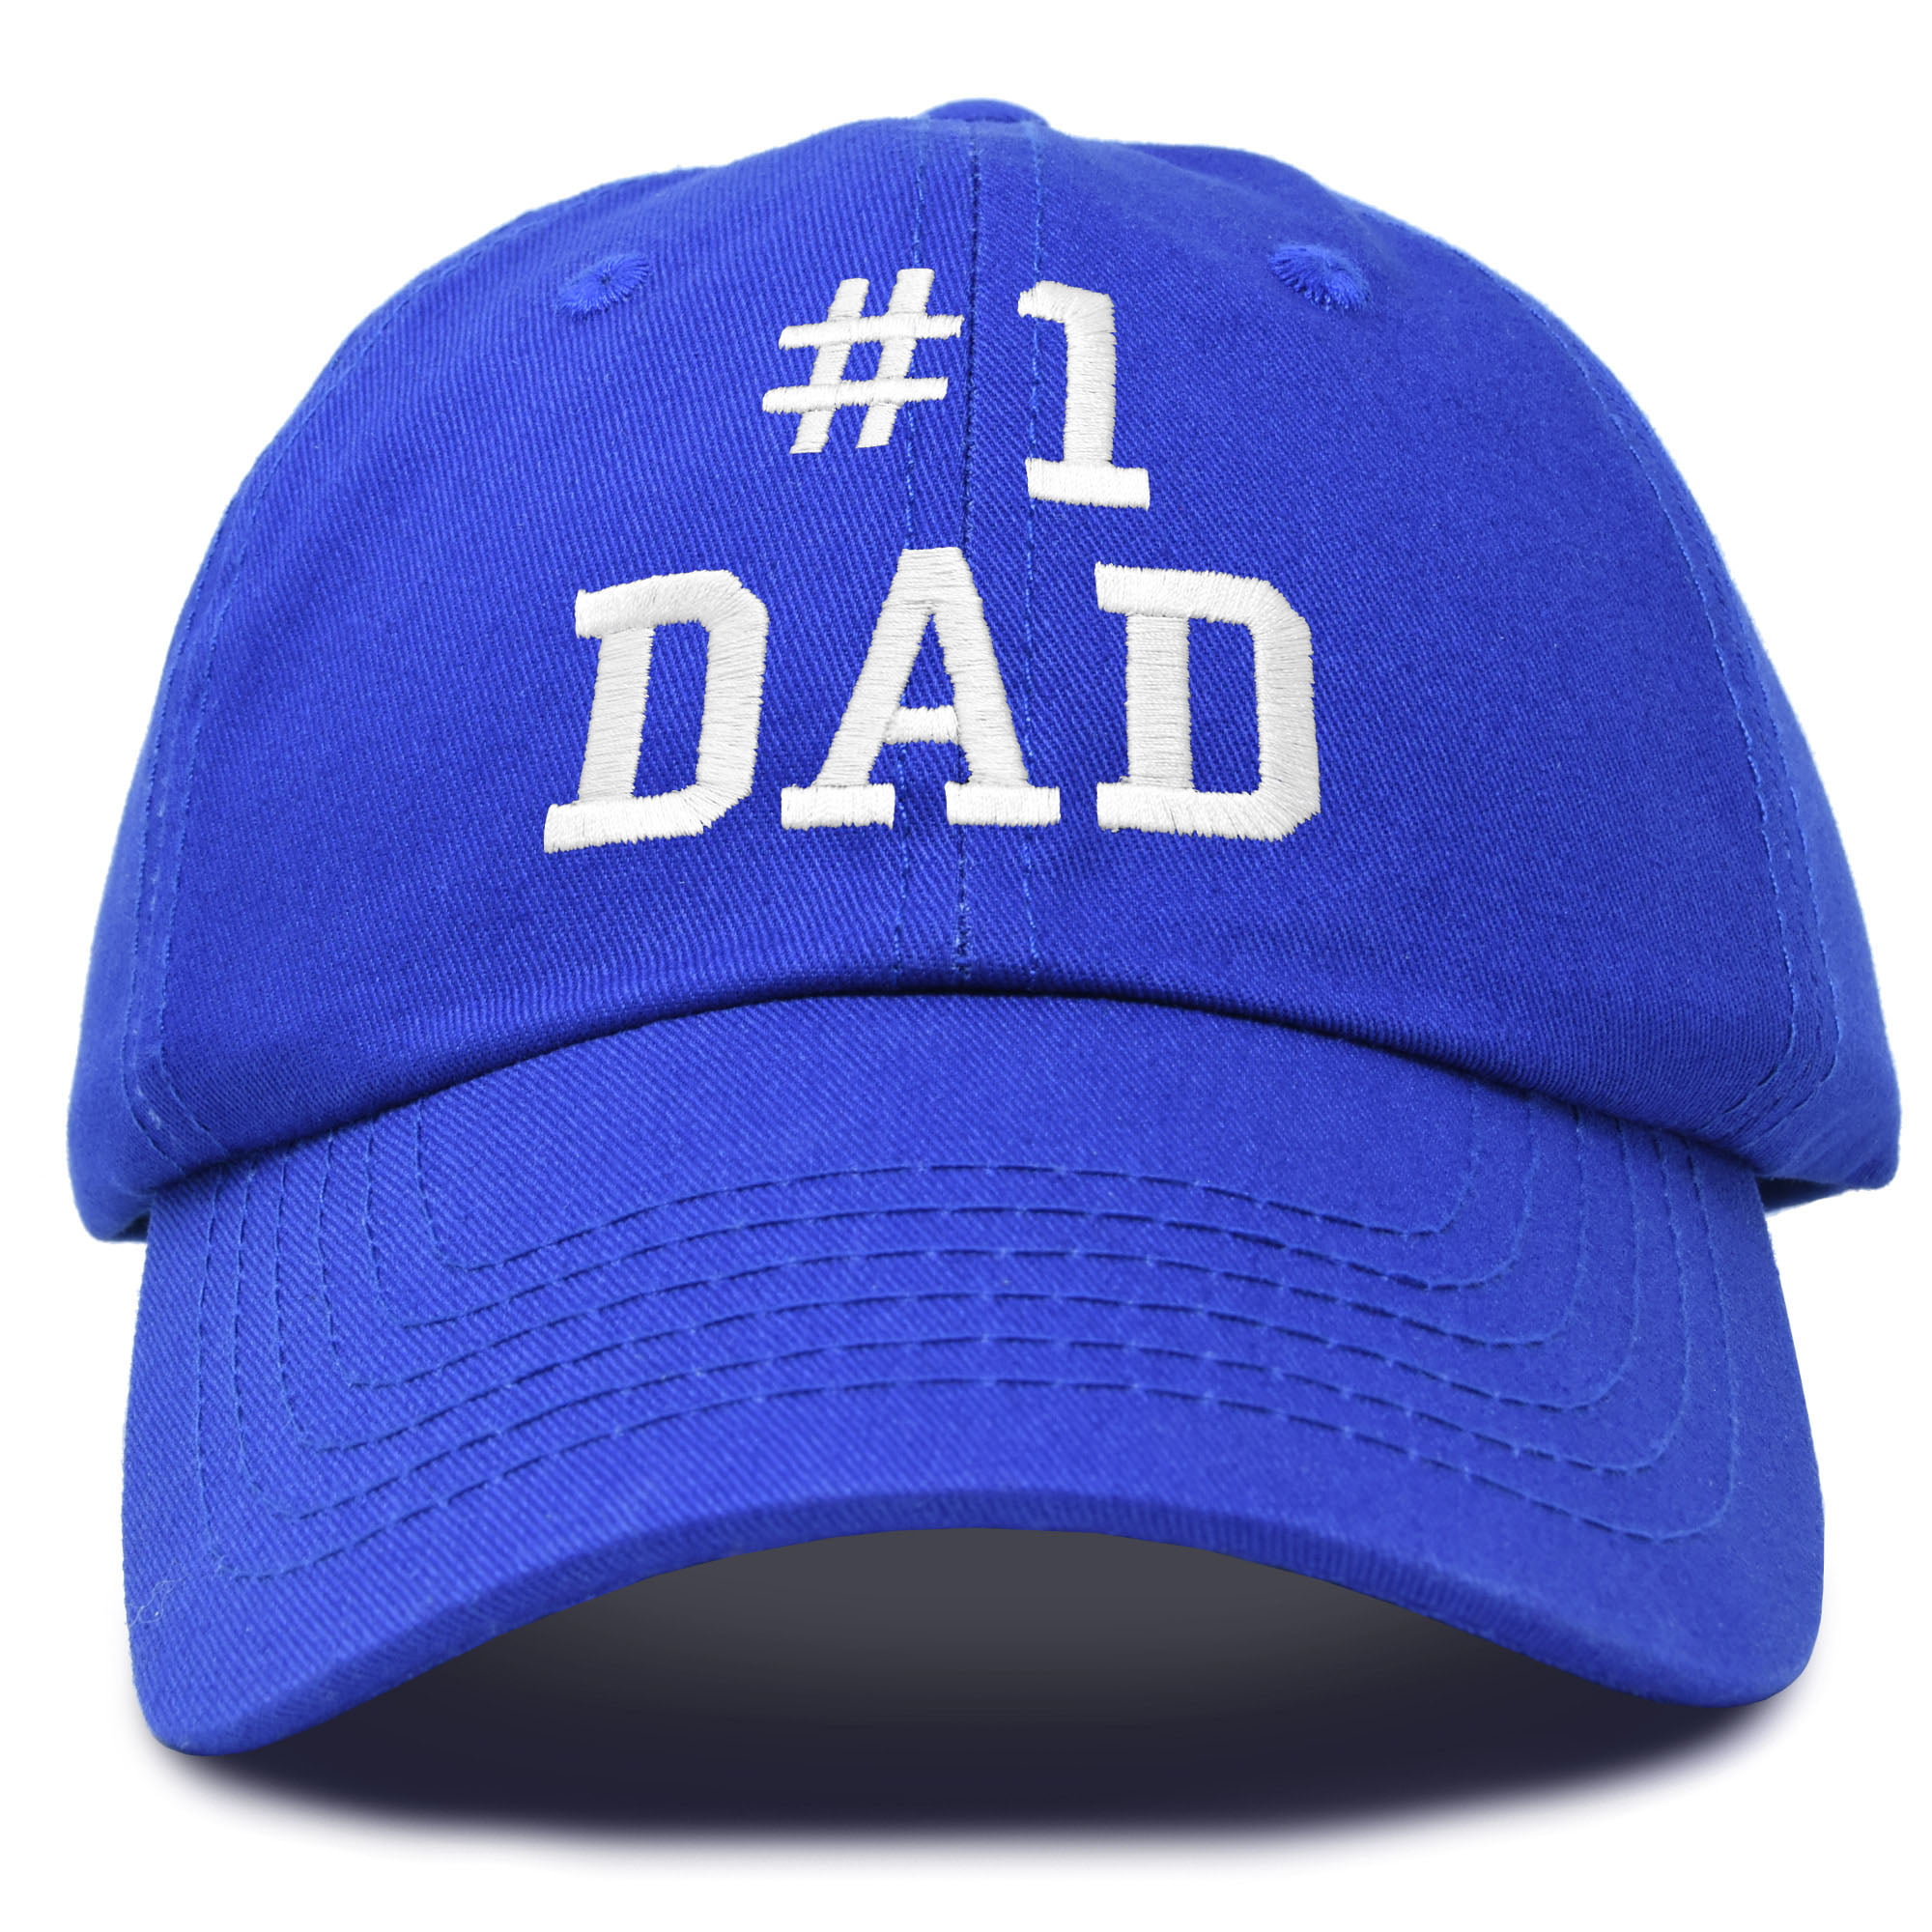 Soft Baseball Cap I Speak Fluent Sarcasm Embroidery Dad Hats for Men & Women 